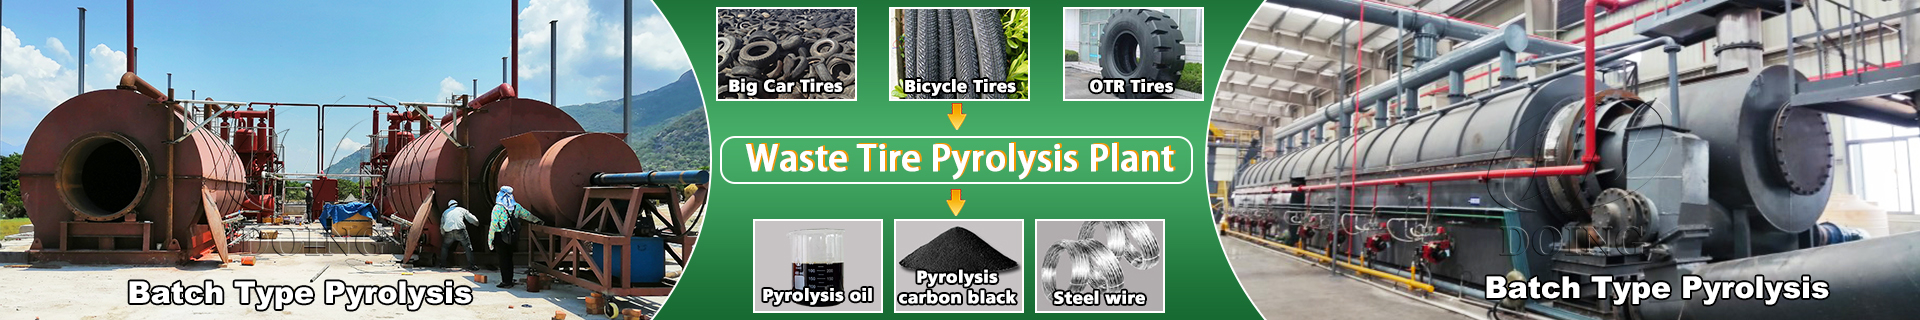 Waste Tire Pyrolysis Plant